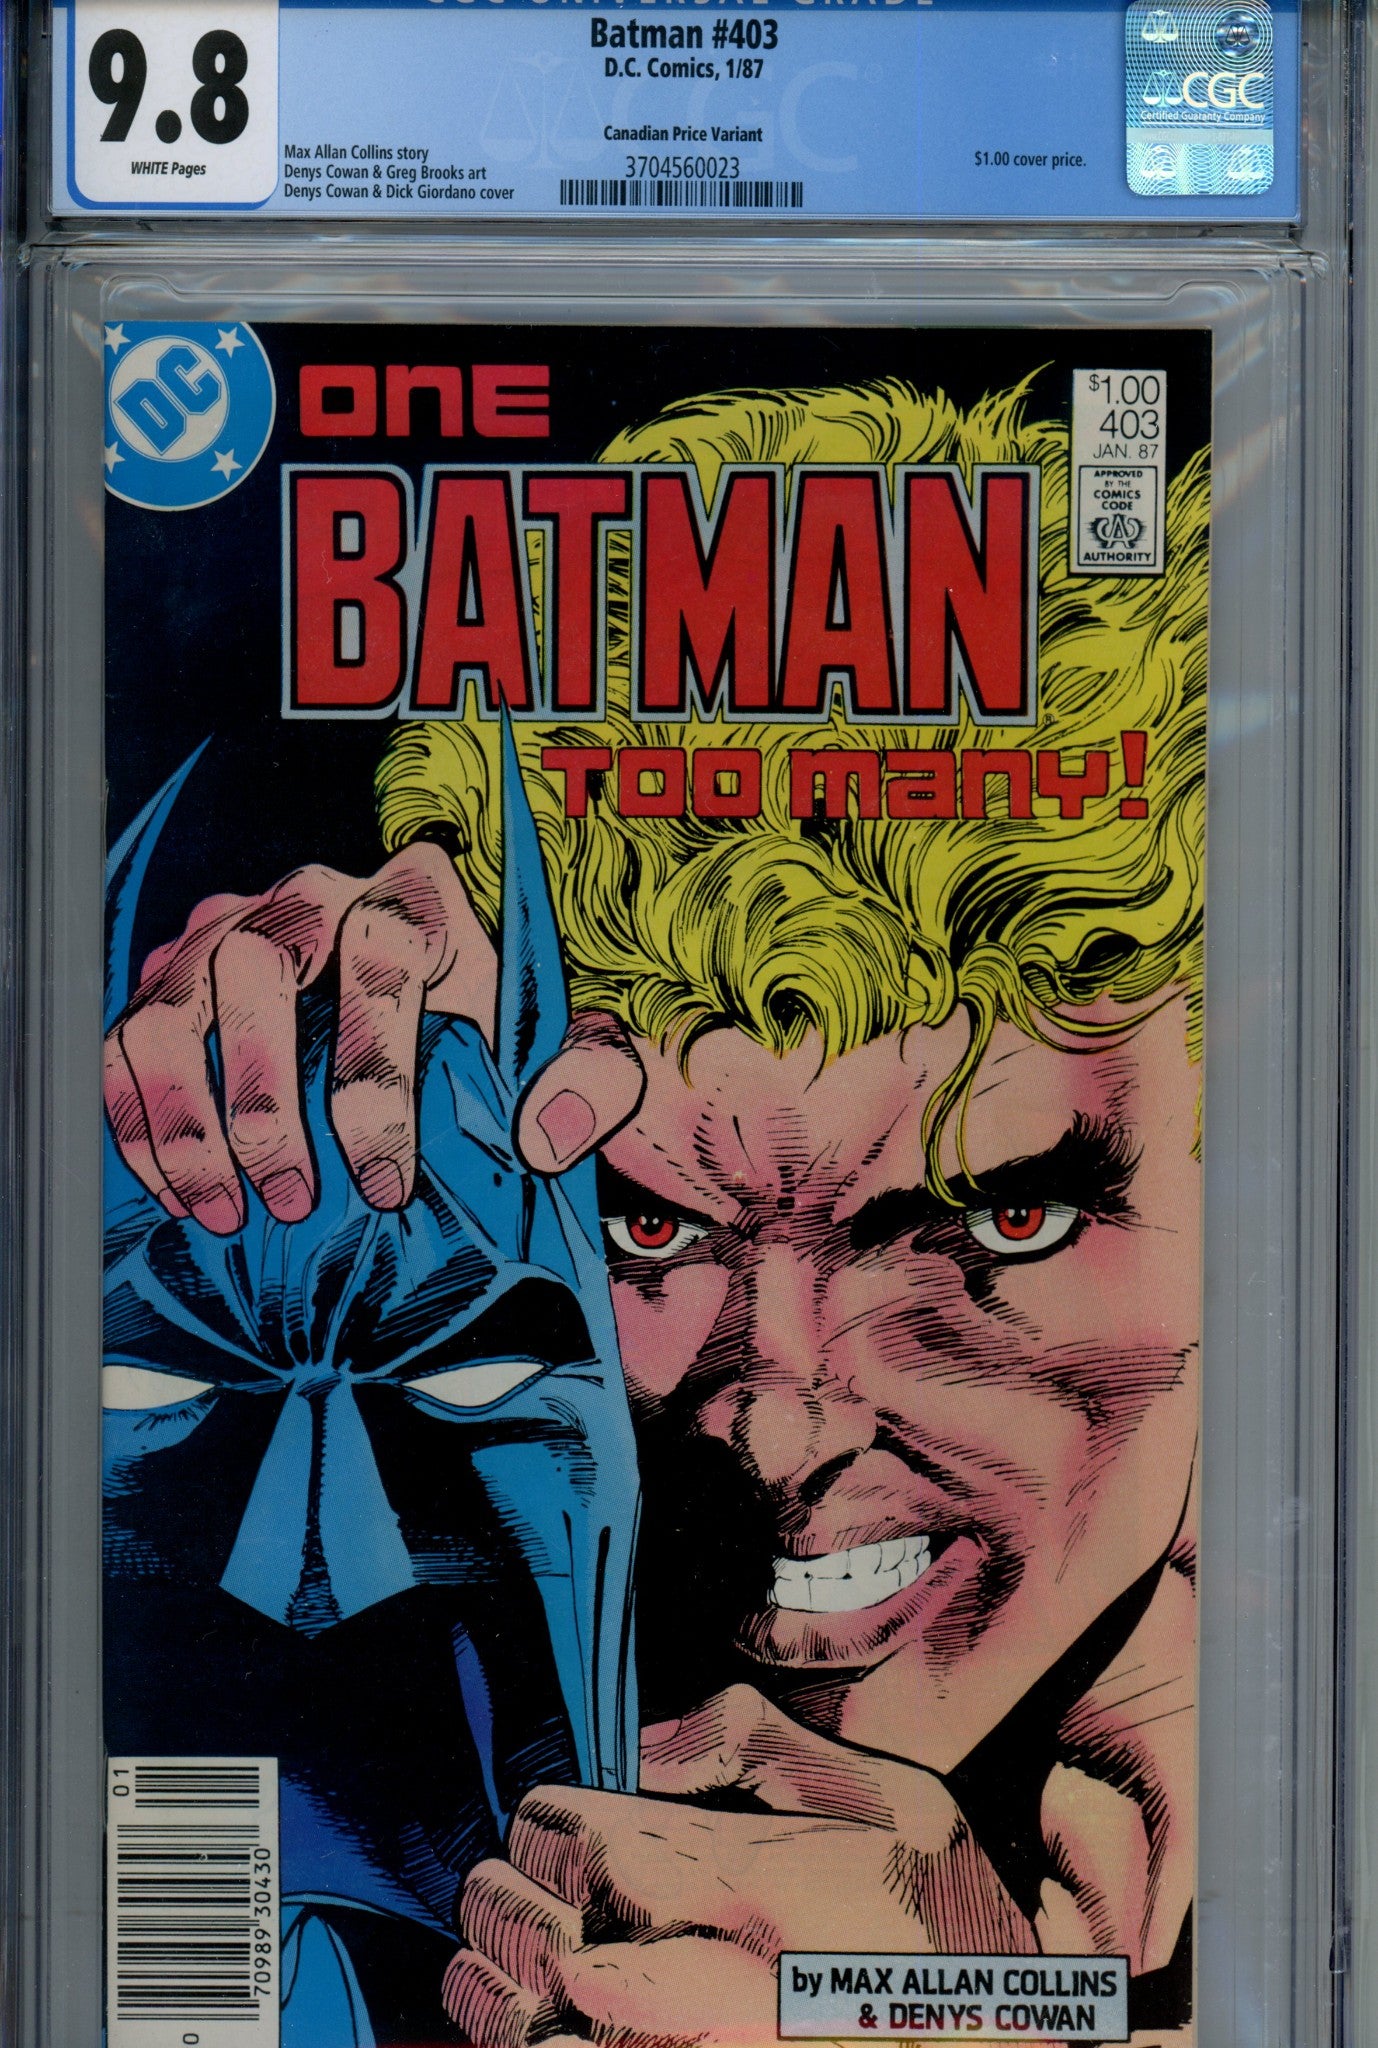 Batman Vol 1 403 Canadian Price Variant CGC 9.8 (1986)